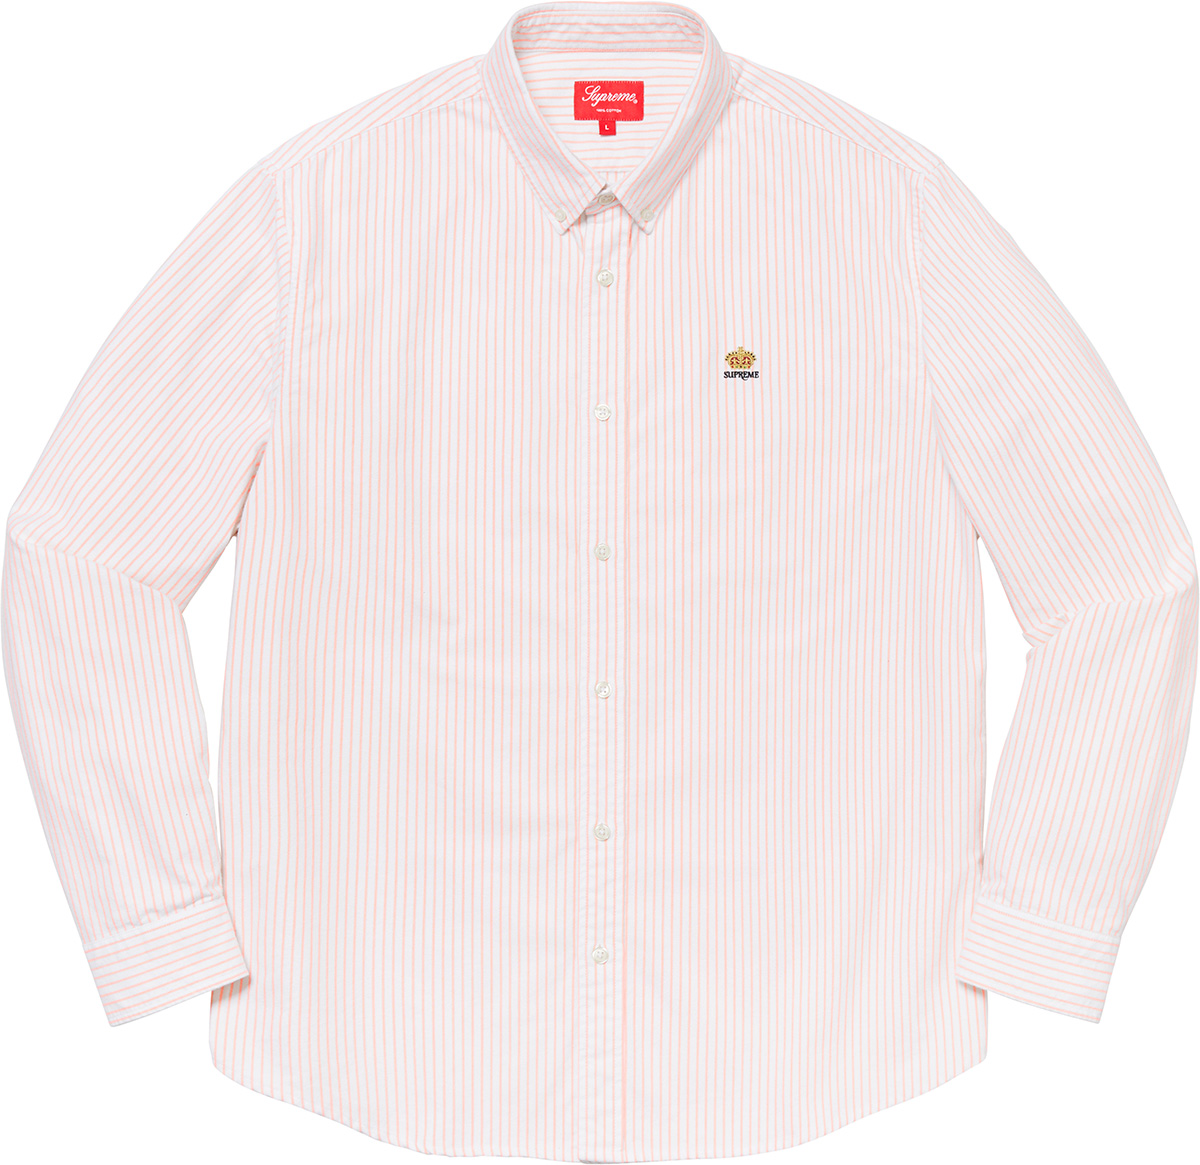 【Mサイズ送料込】Supreme Flannel Oxford Shirt